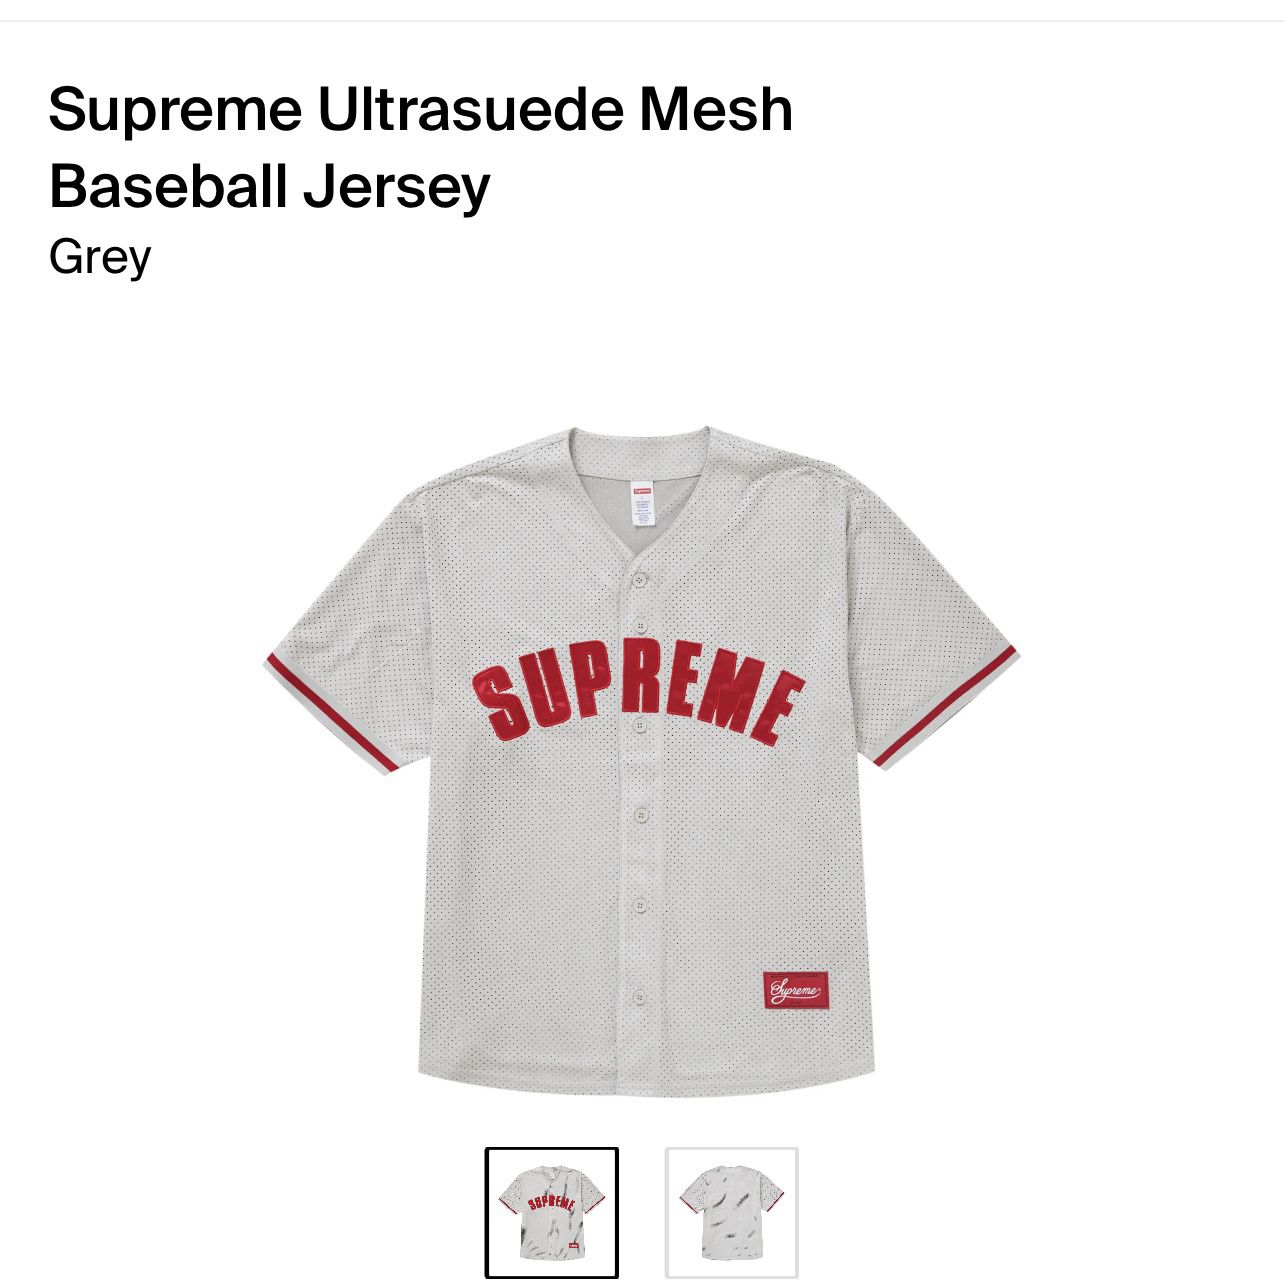 Grey Supreme Ultrasuede Mesh Baseball Jersey